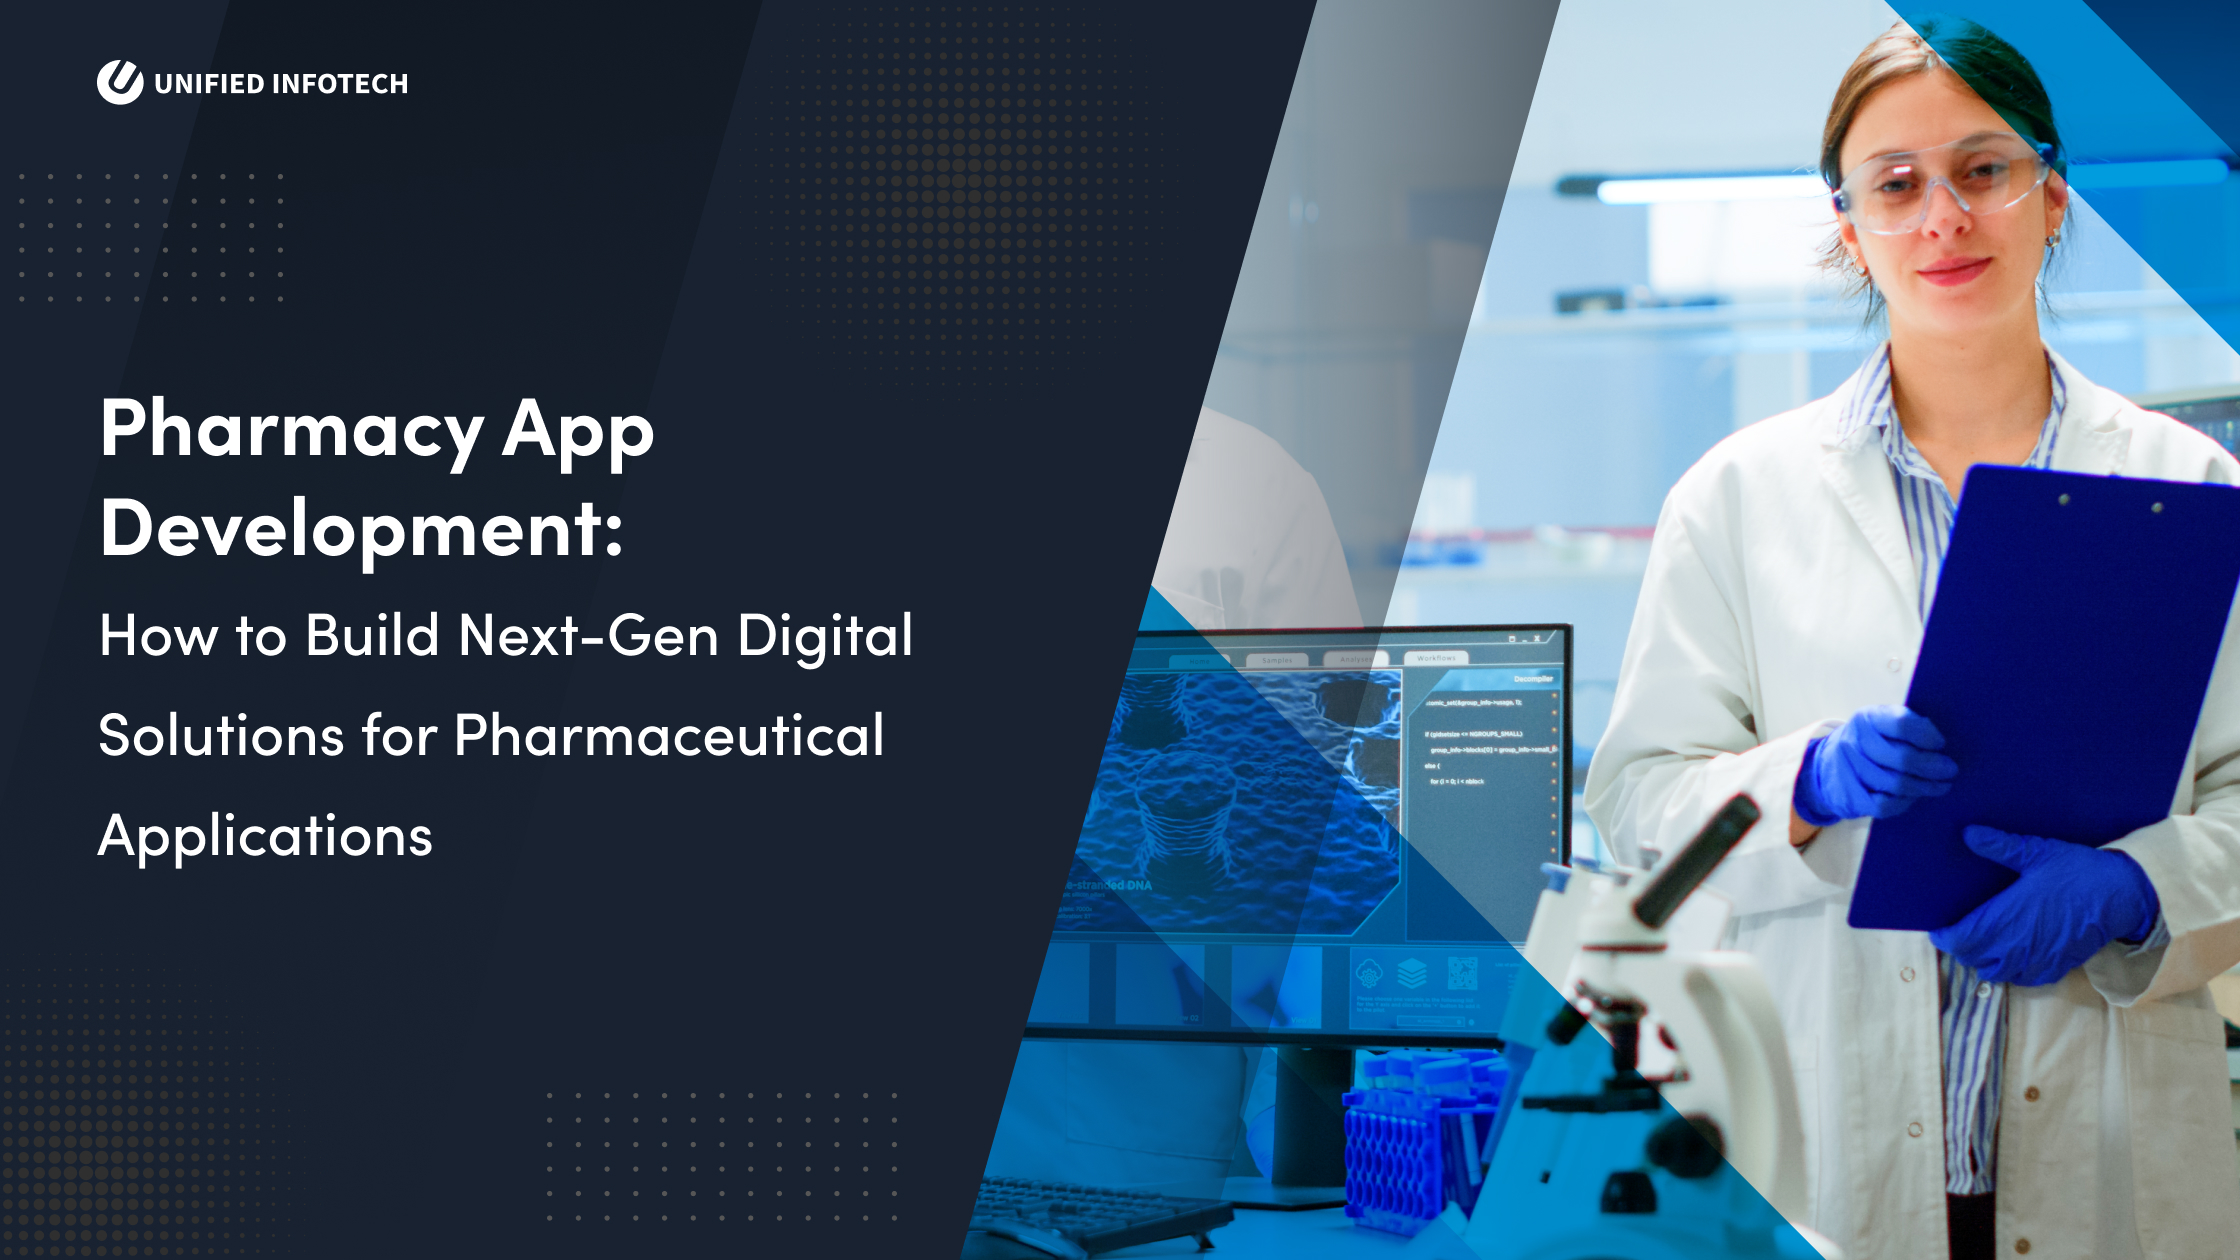 Pharmacy App Development: How to Build Next-Gen Digital Solutions for Pharmaceutical Applications